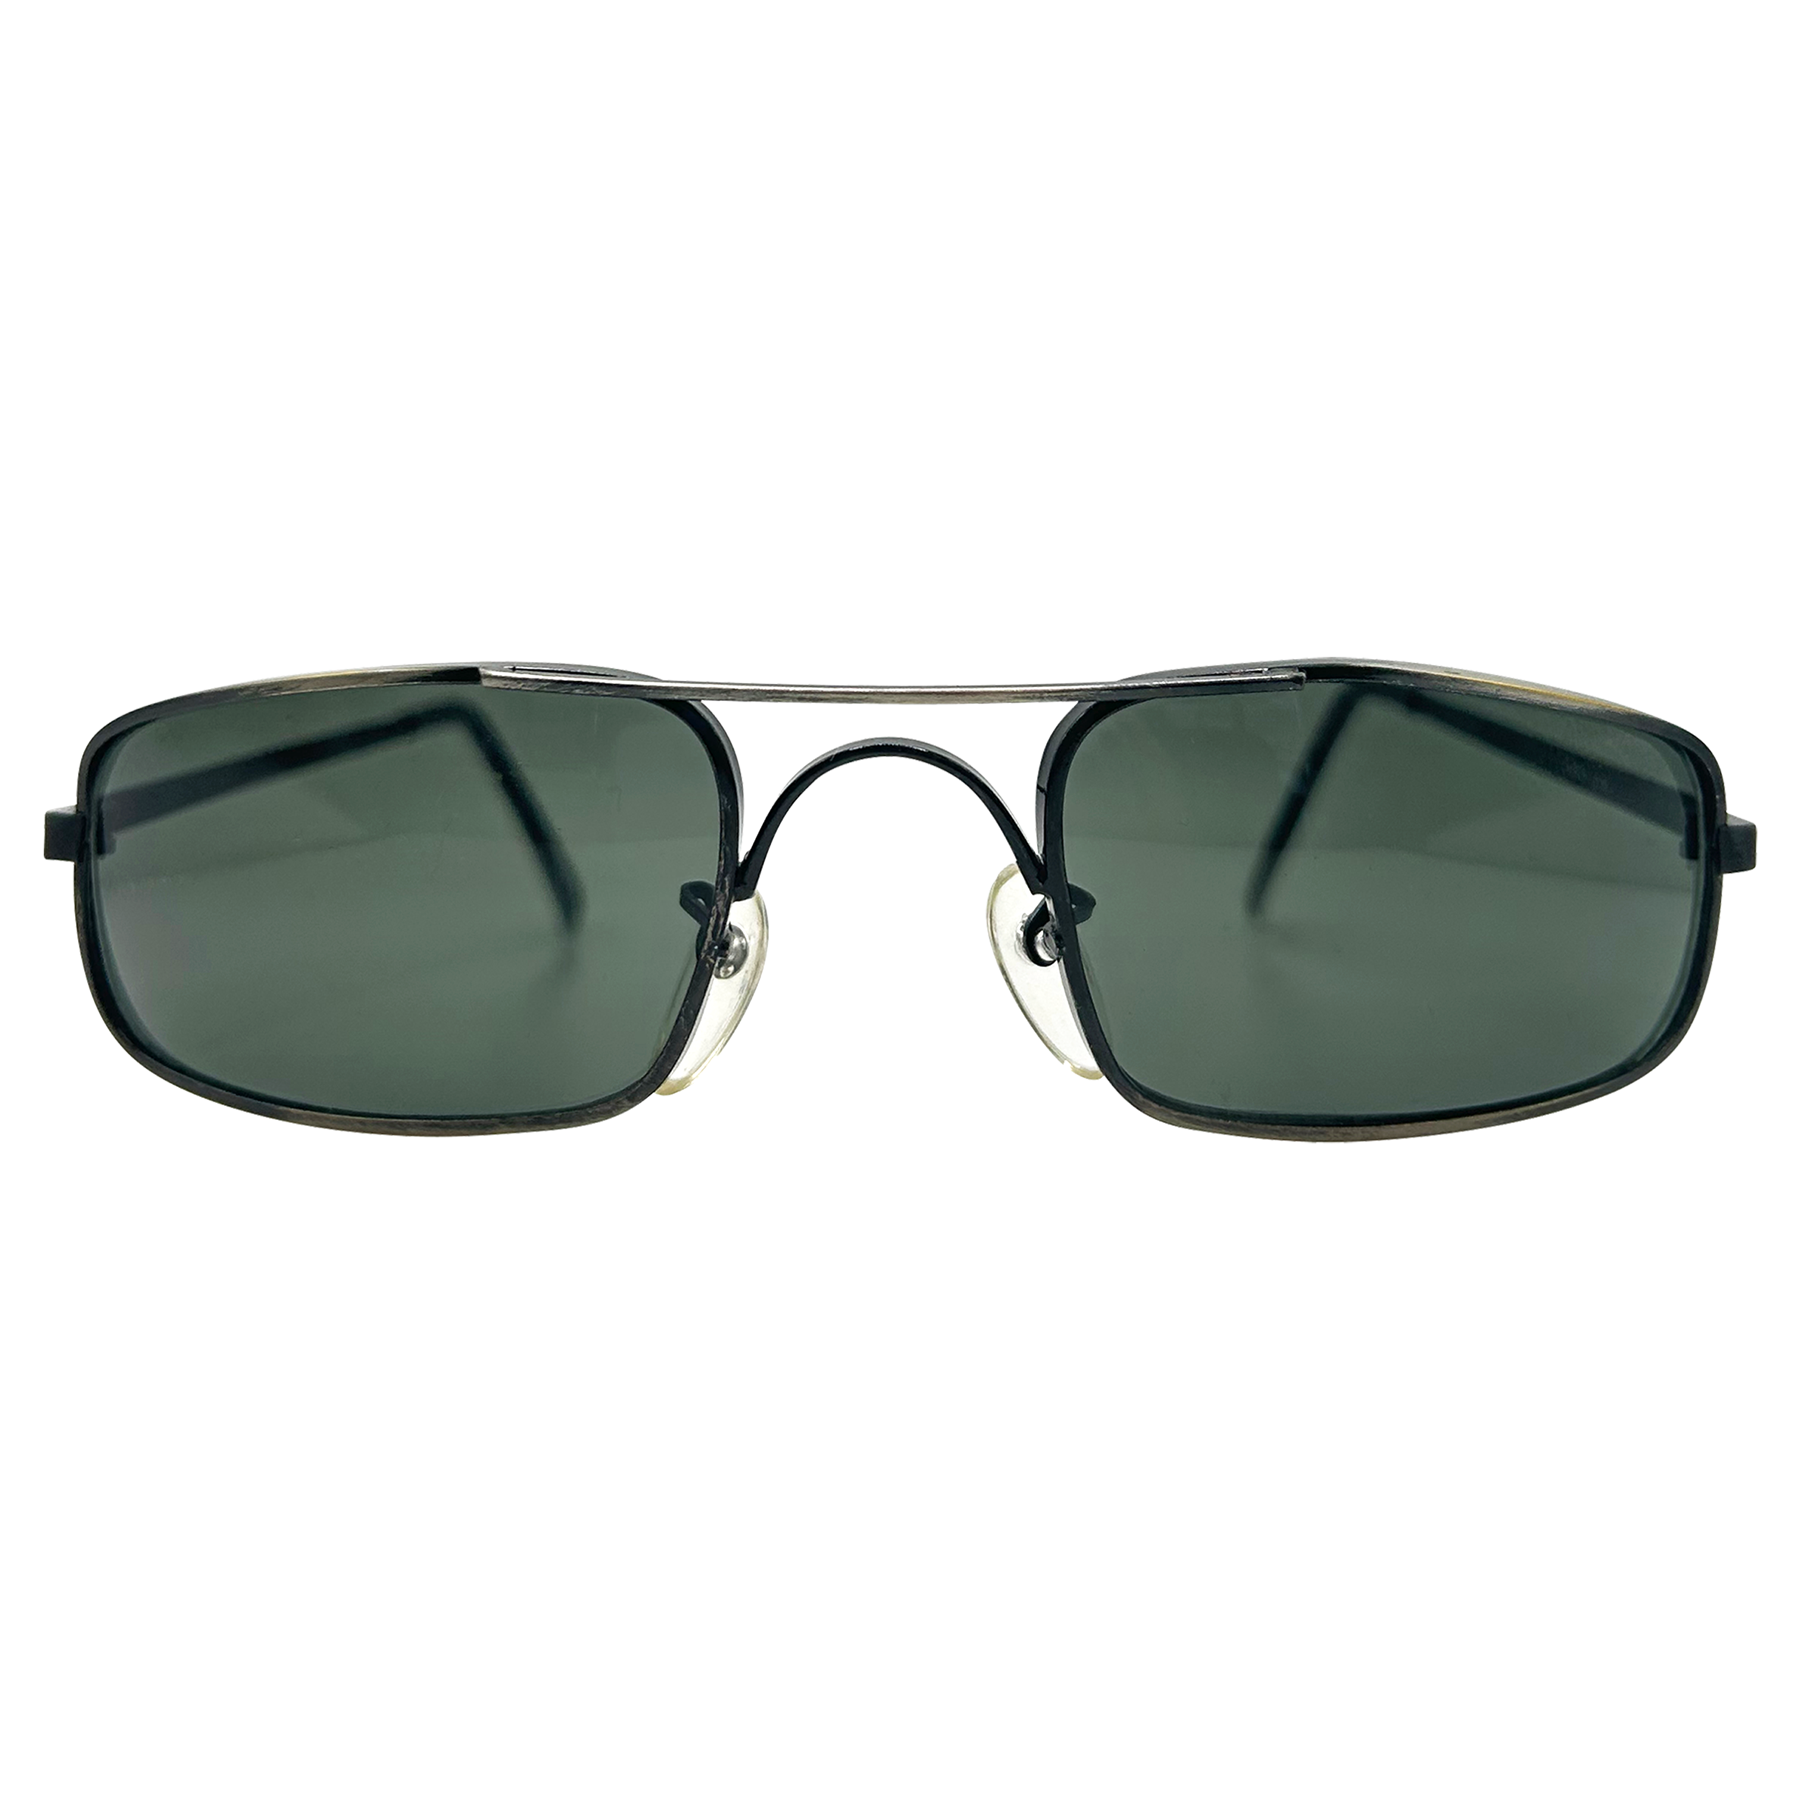 SAHARA Aviator 90s Sunglasses